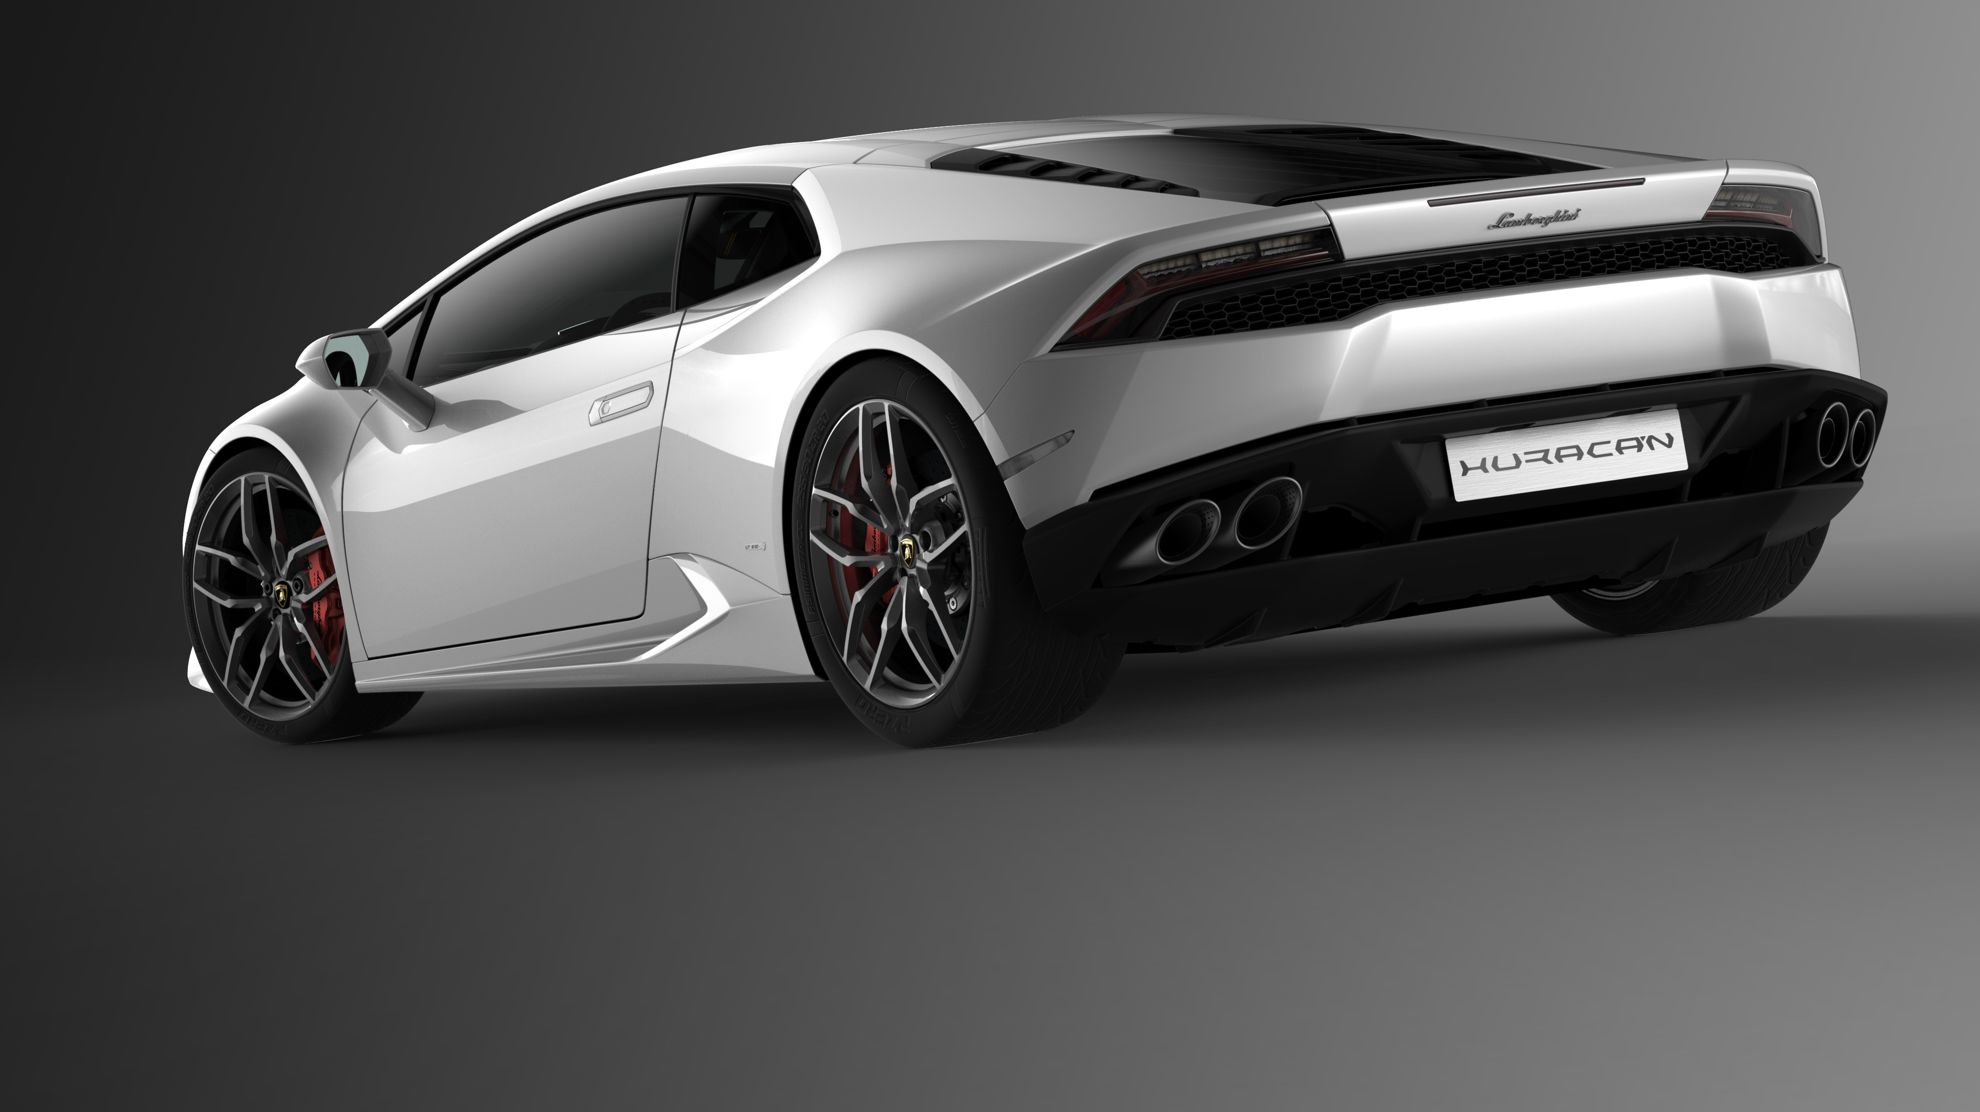 Lamborghini increases worldwide sales